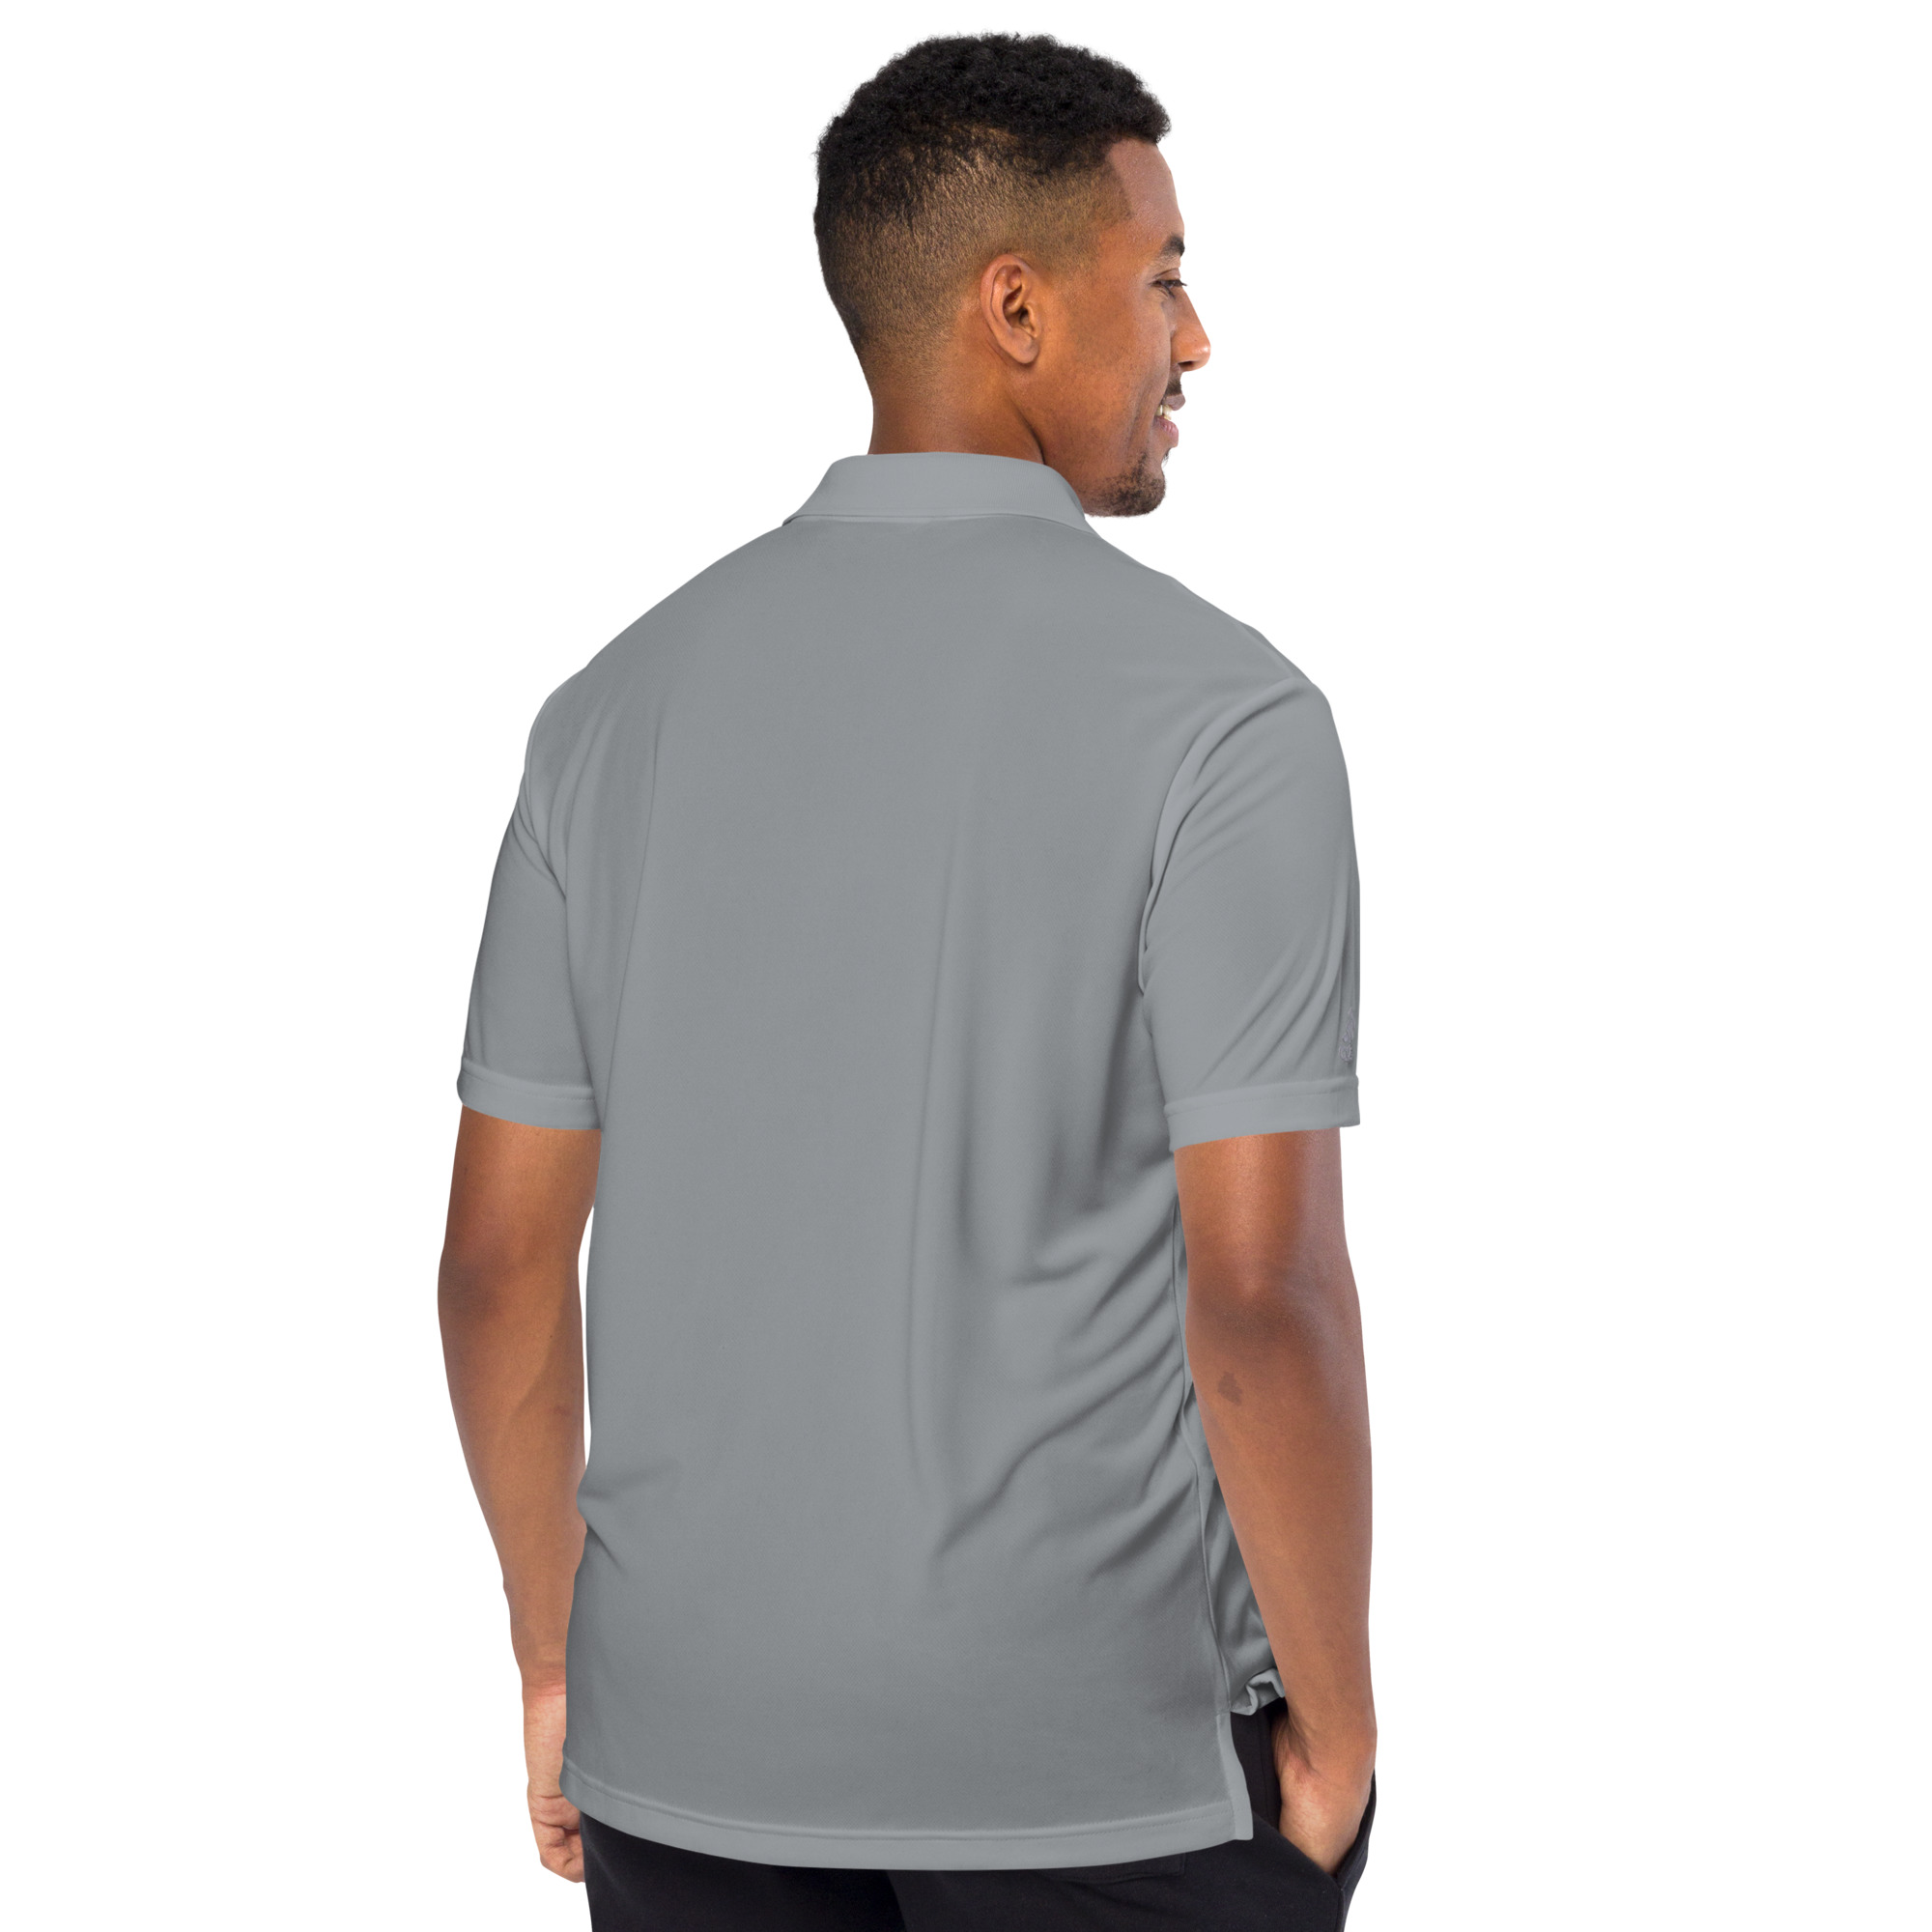 back angle of a person wearing gray bitcoin adidas polo shirt